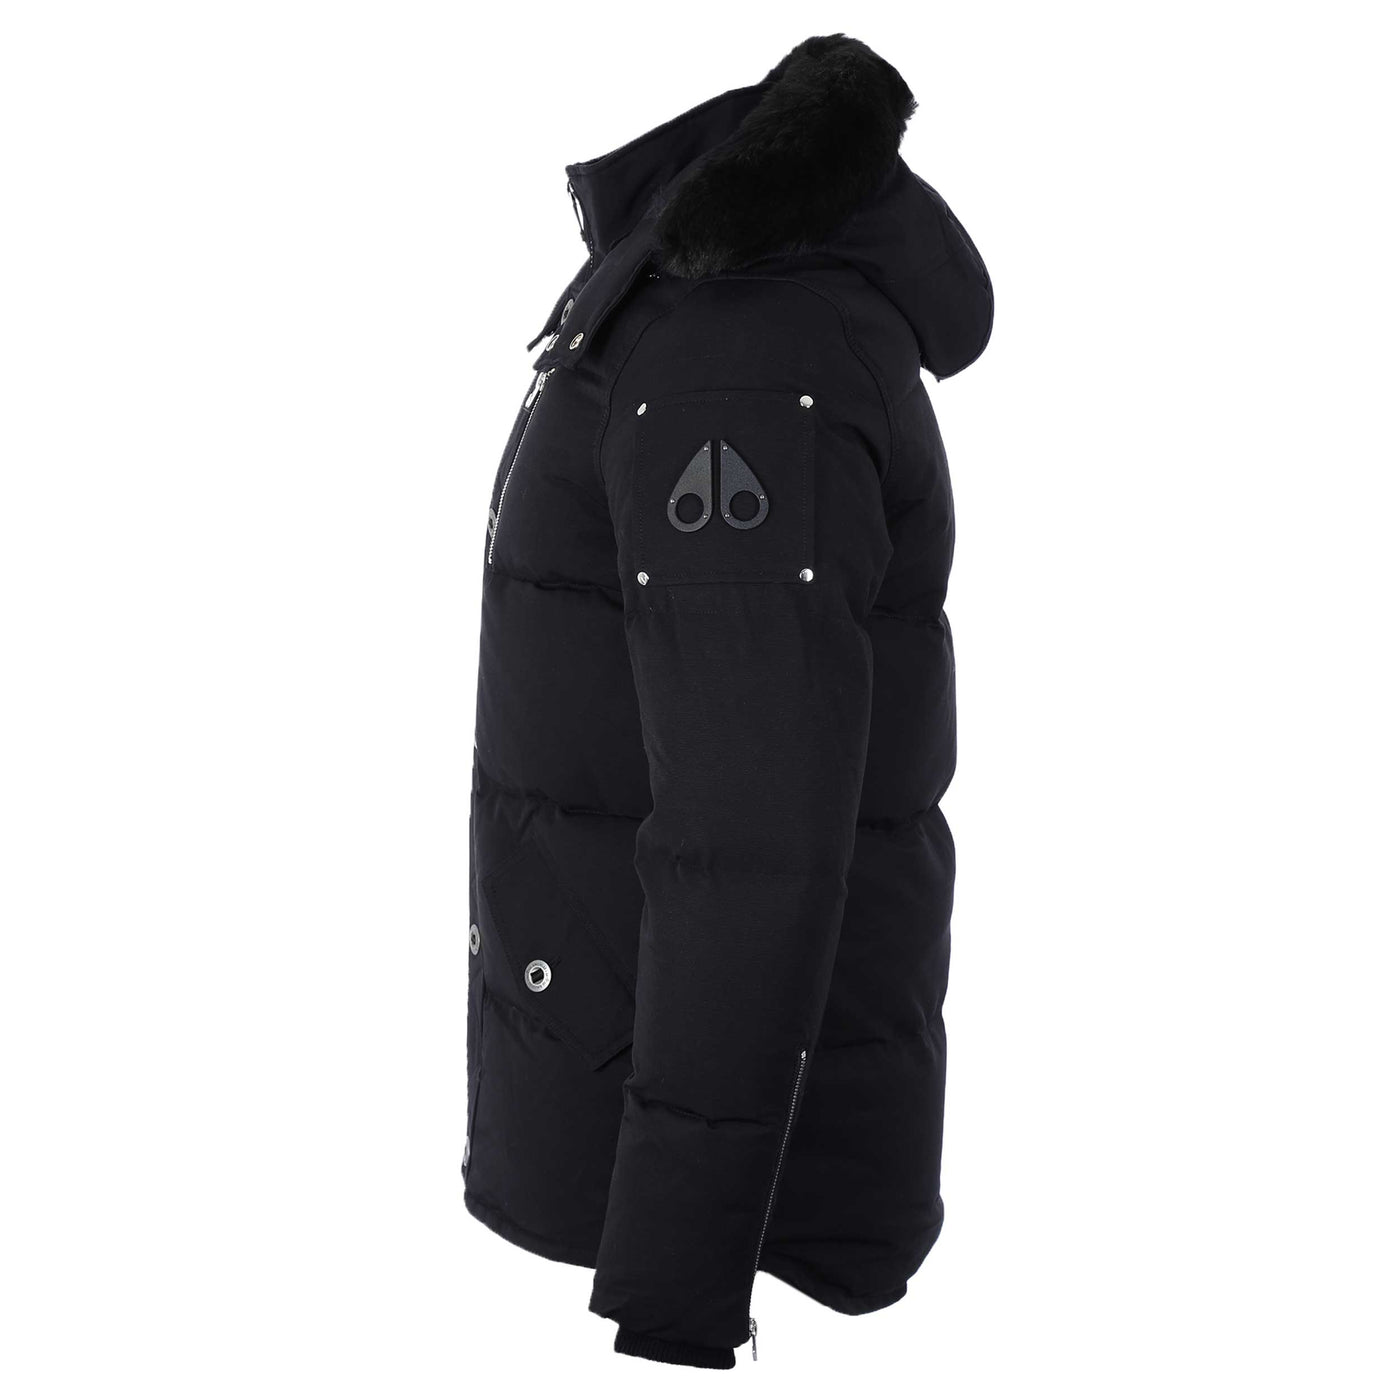 Moose Knuckles 3Q Jacket in Navy & Black Fur Side